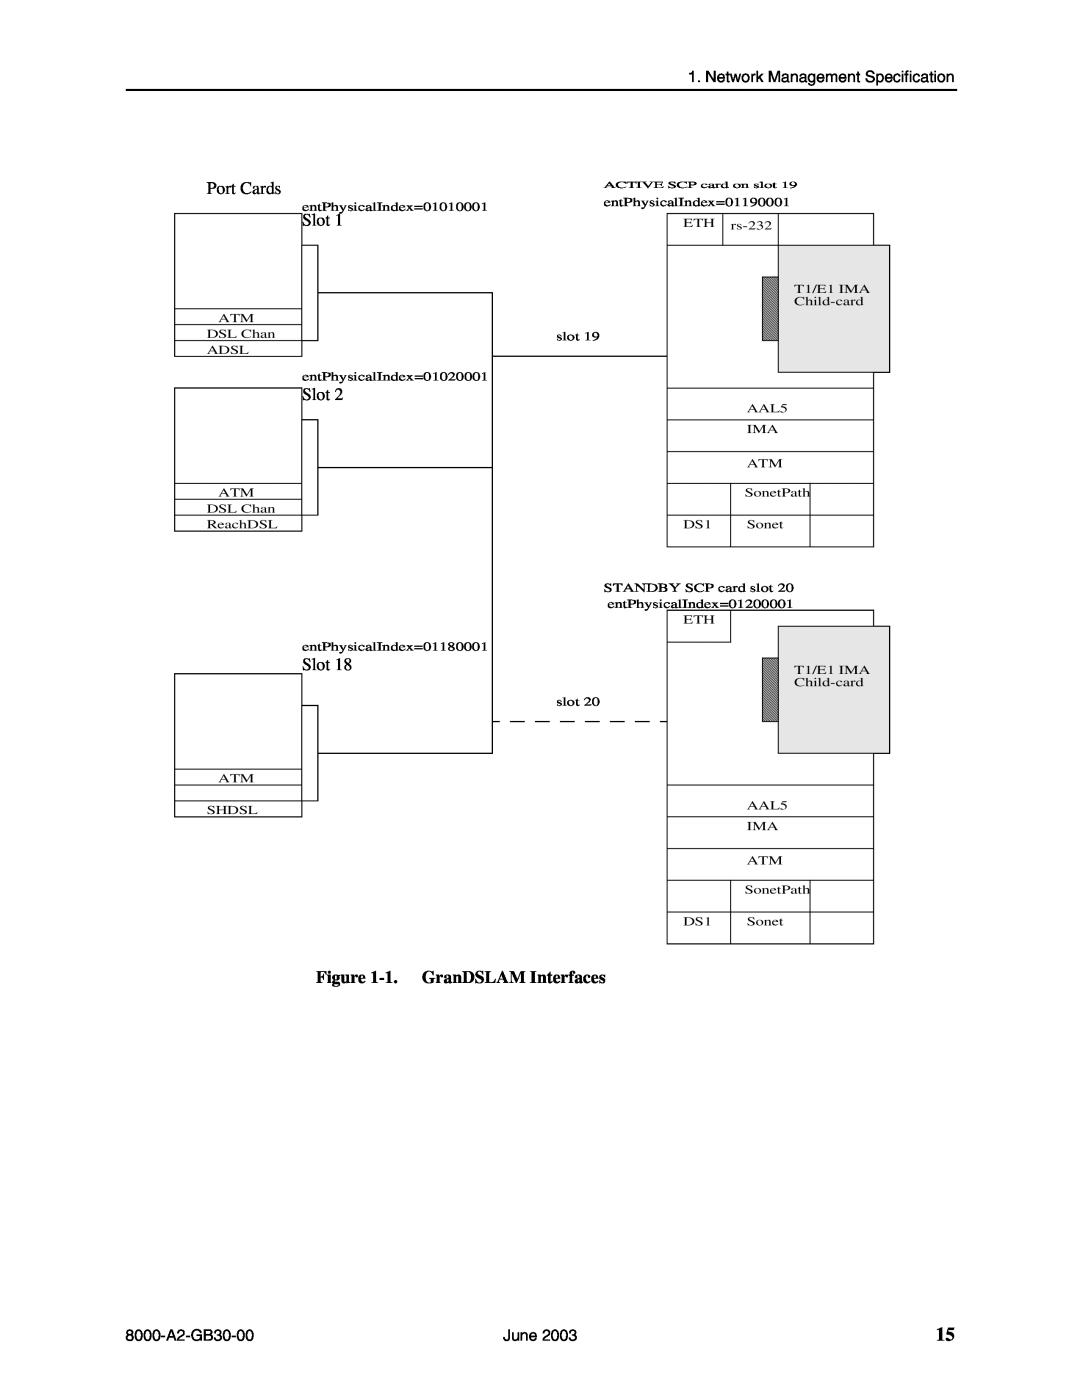 Paradyne 8620, 8820 manual 1. GranDSLAM Interfaces, ACTIVE SCP card on slot 